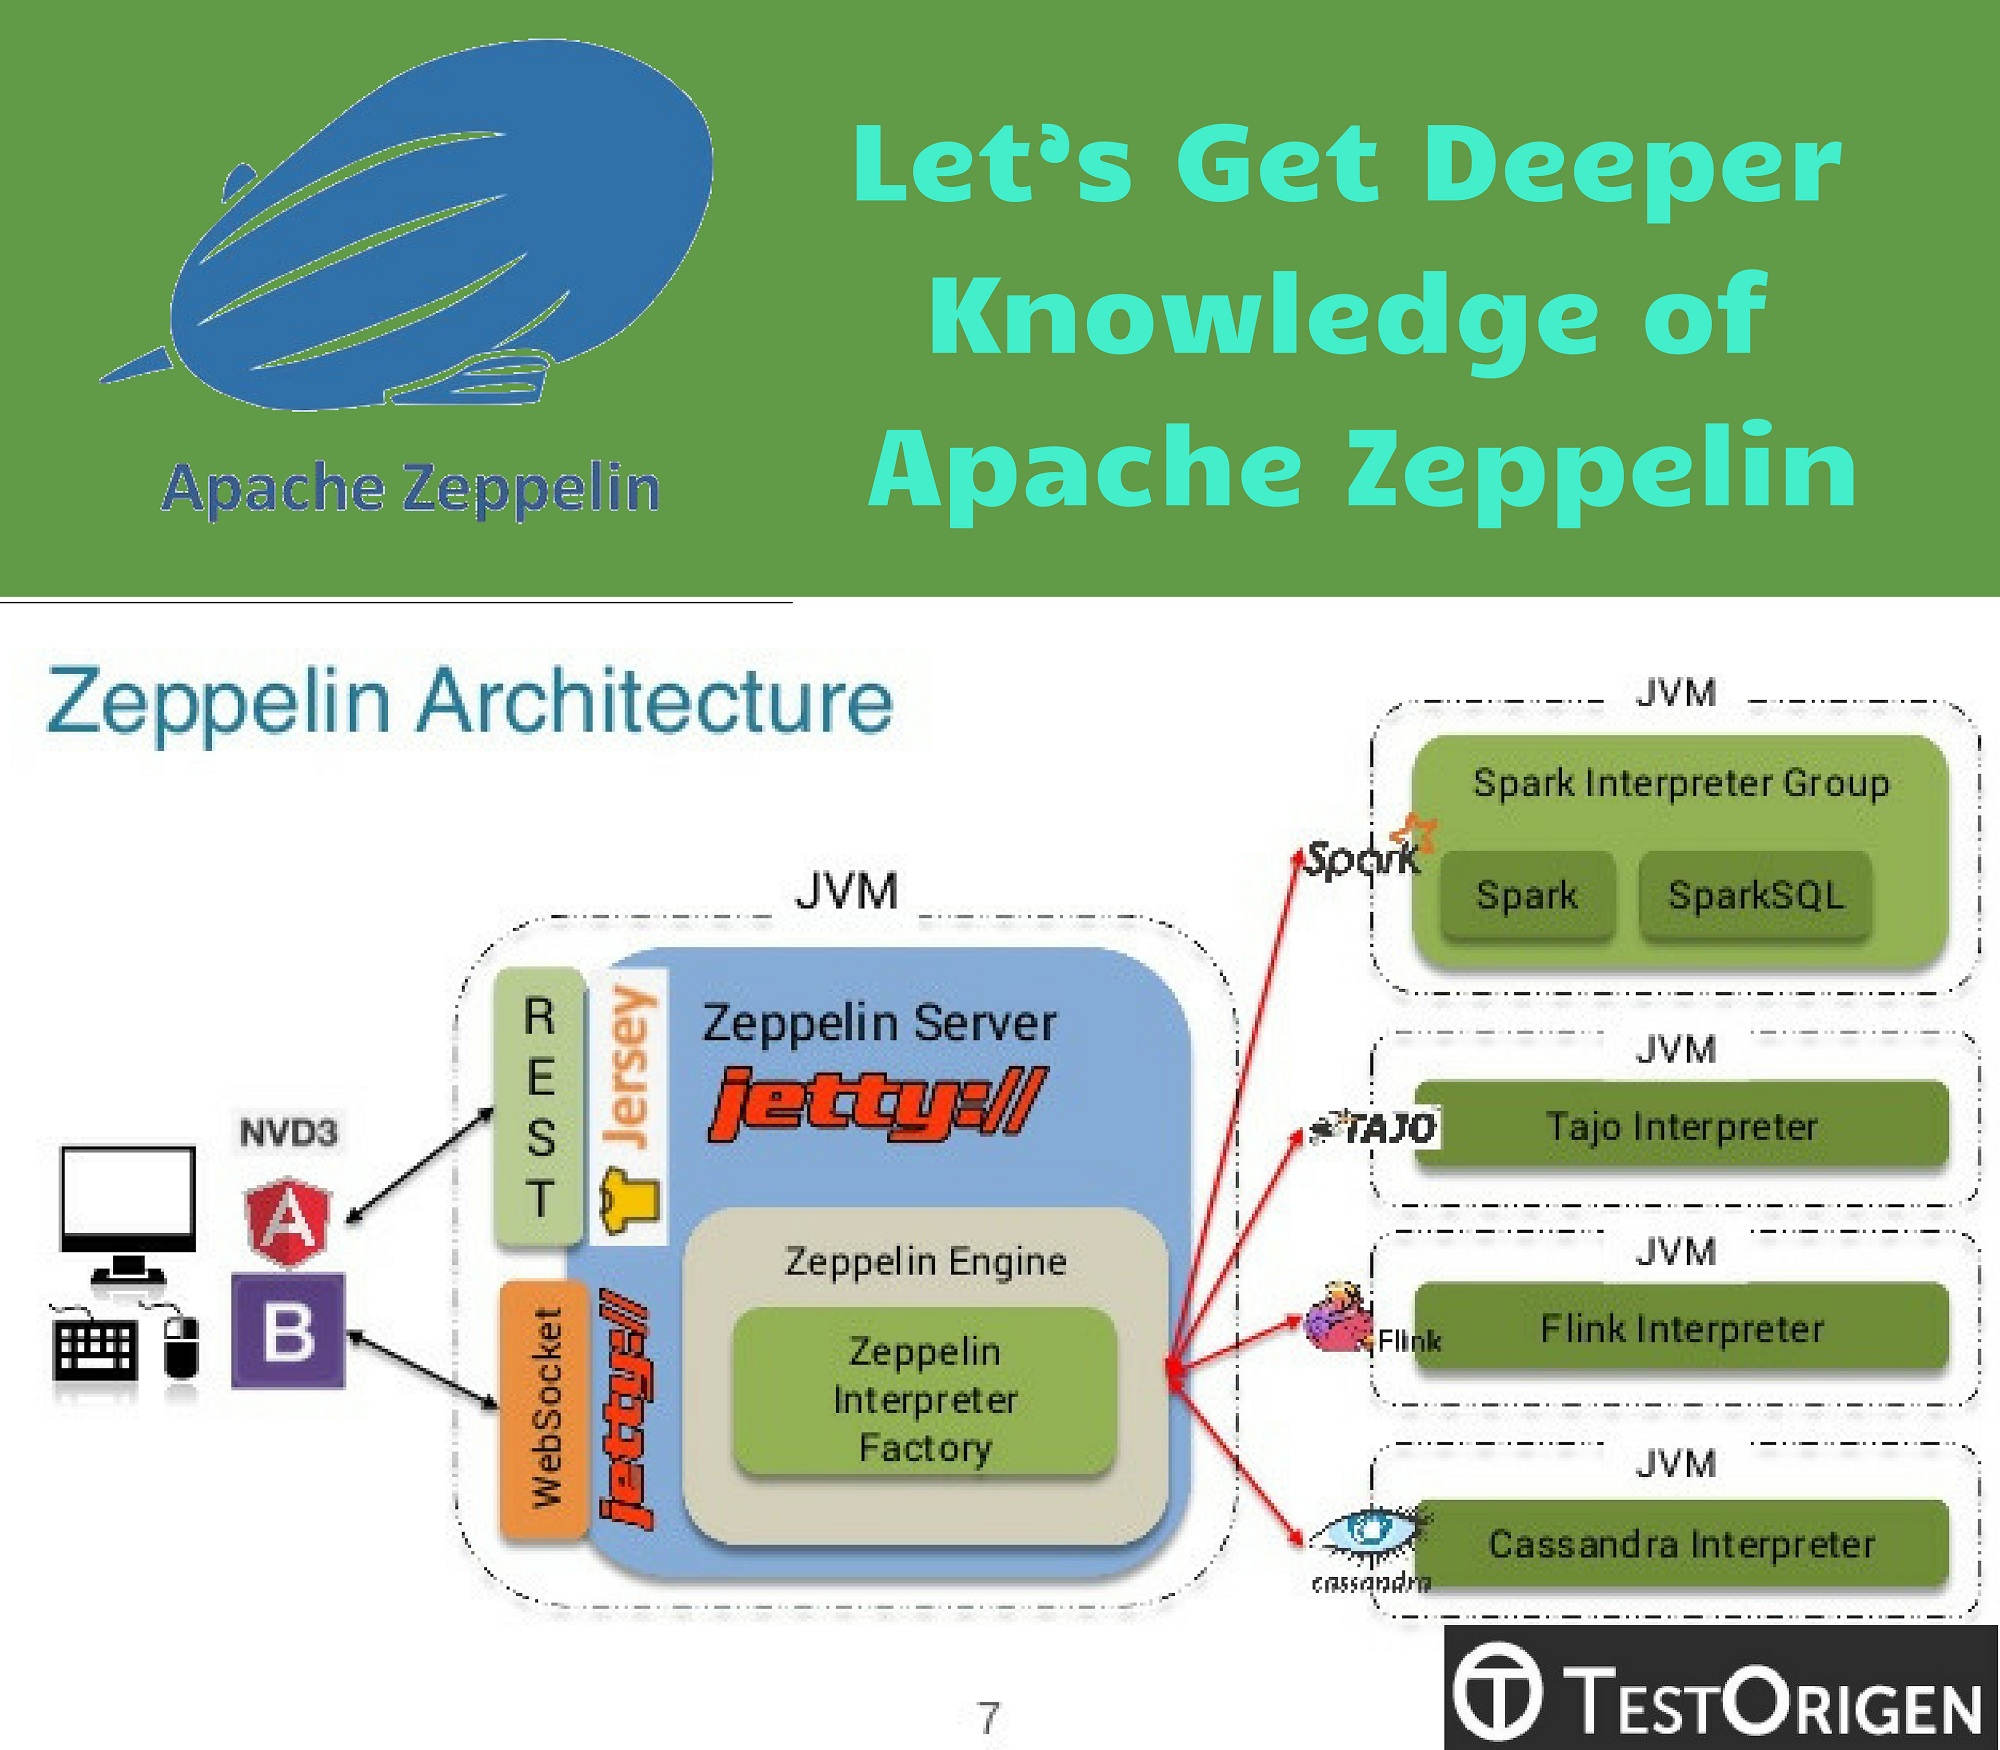 Let’s Get Deeper Knowledge of Apache Zeppelin